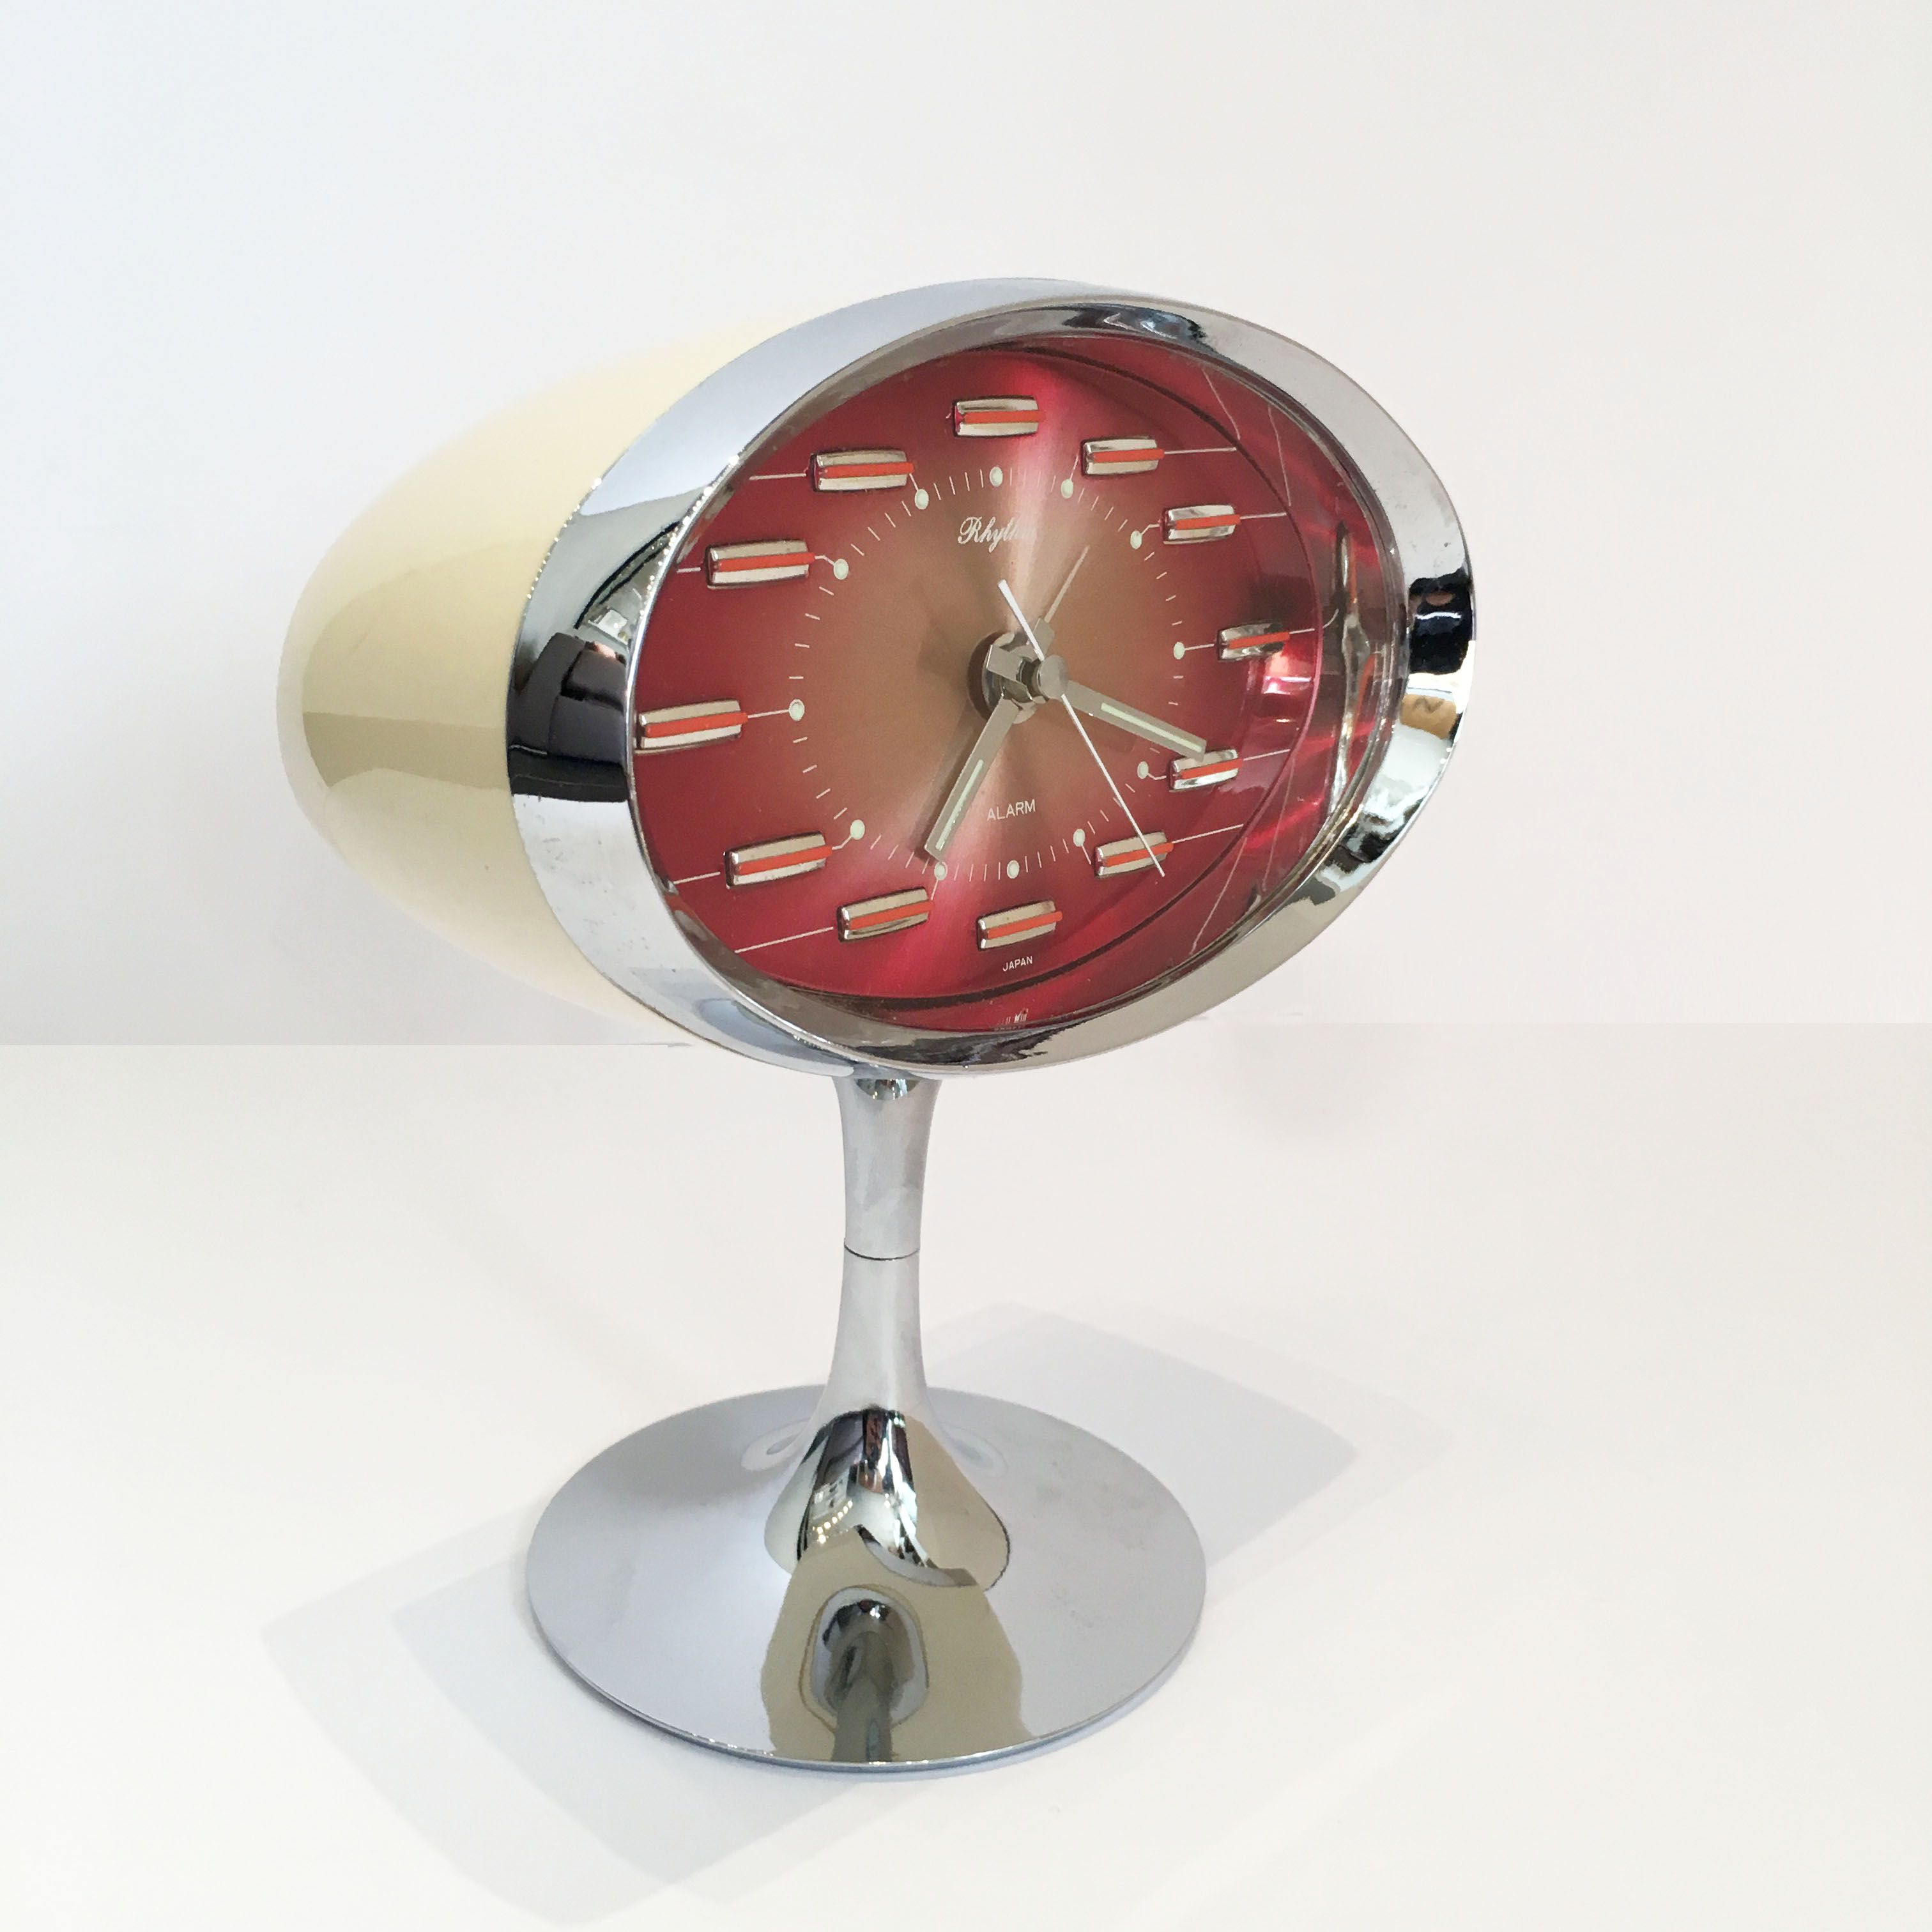 Vintage Japanese alarm clock Tulip by Rtyhm - Design Market